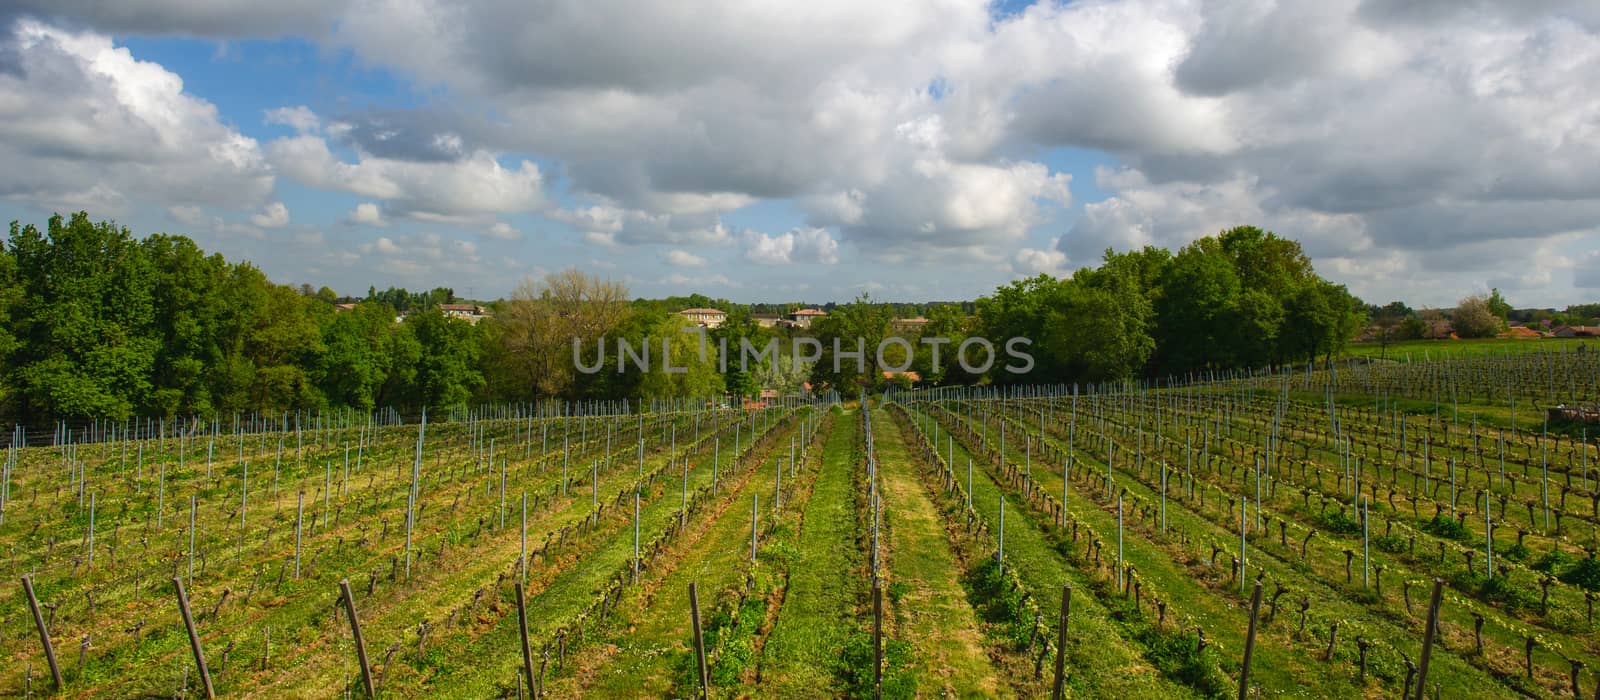 Vineyards in the sunshine by FreeProd